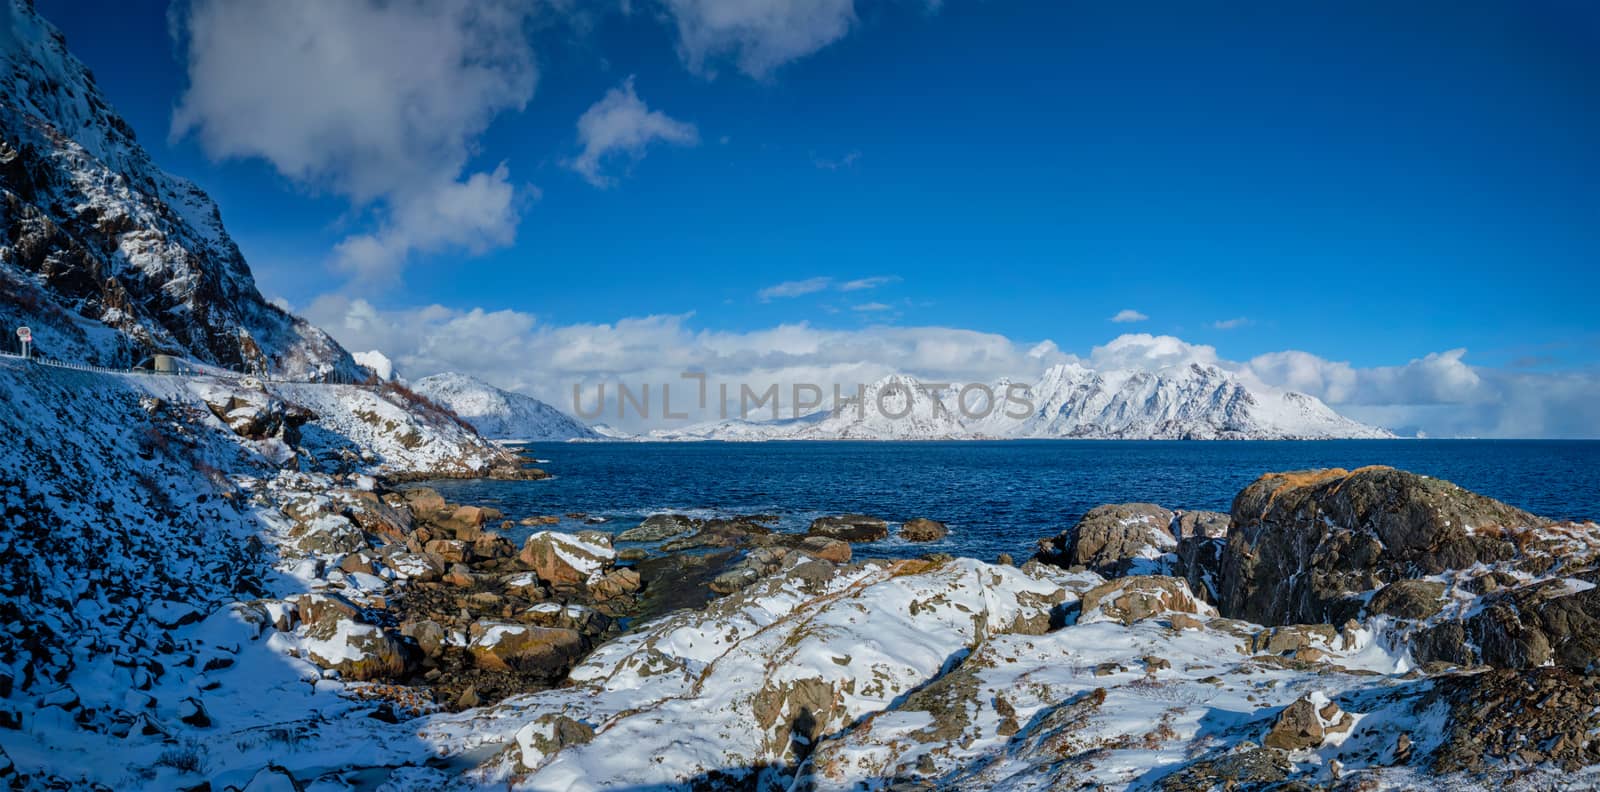 Lofoten islands and Norwegian sea in winter, Norway by dimol